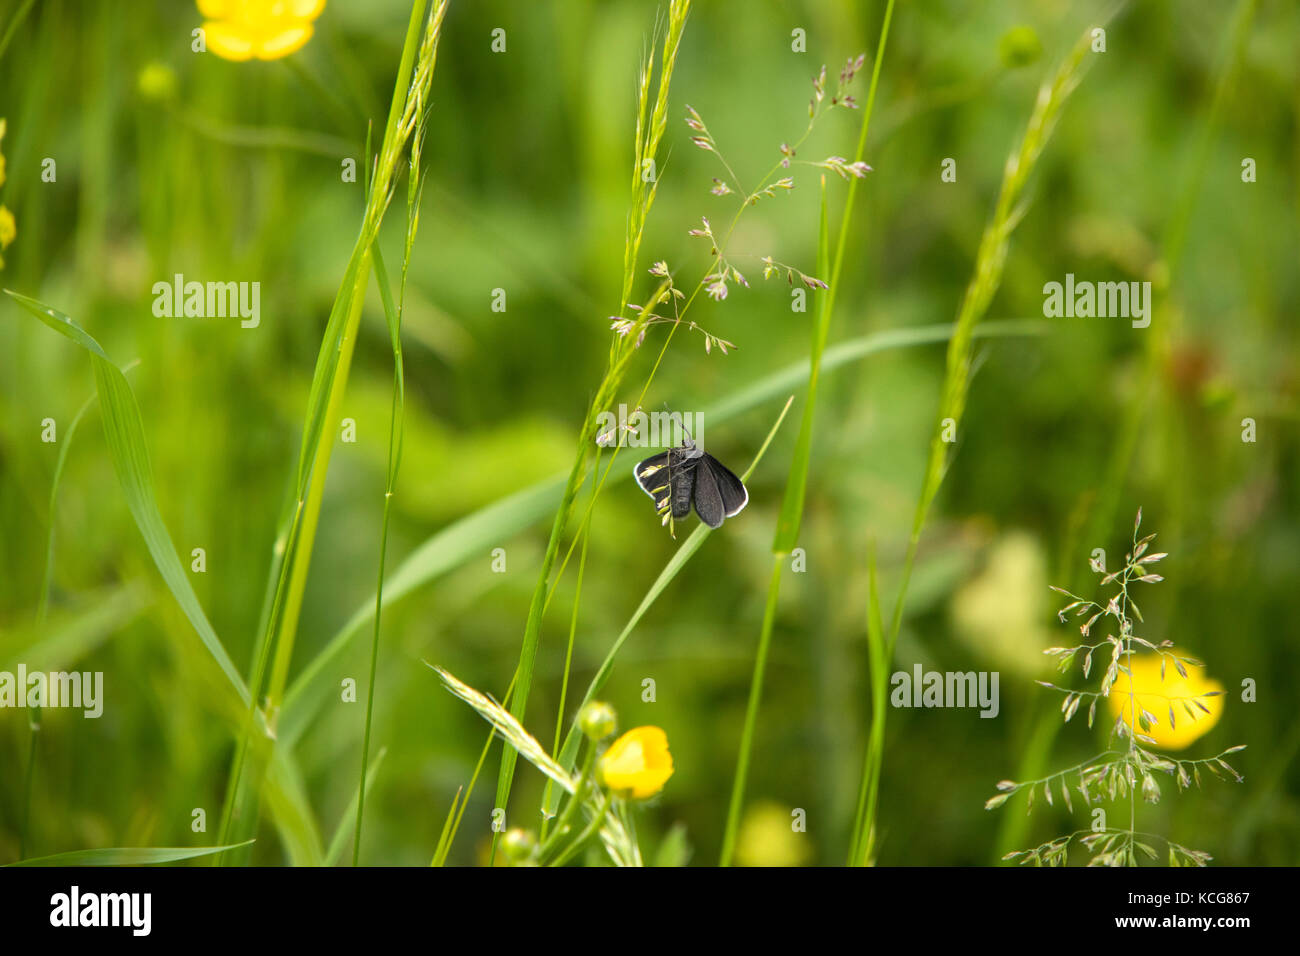 Chimney sweep moth resting on grass stalk Stock Photo